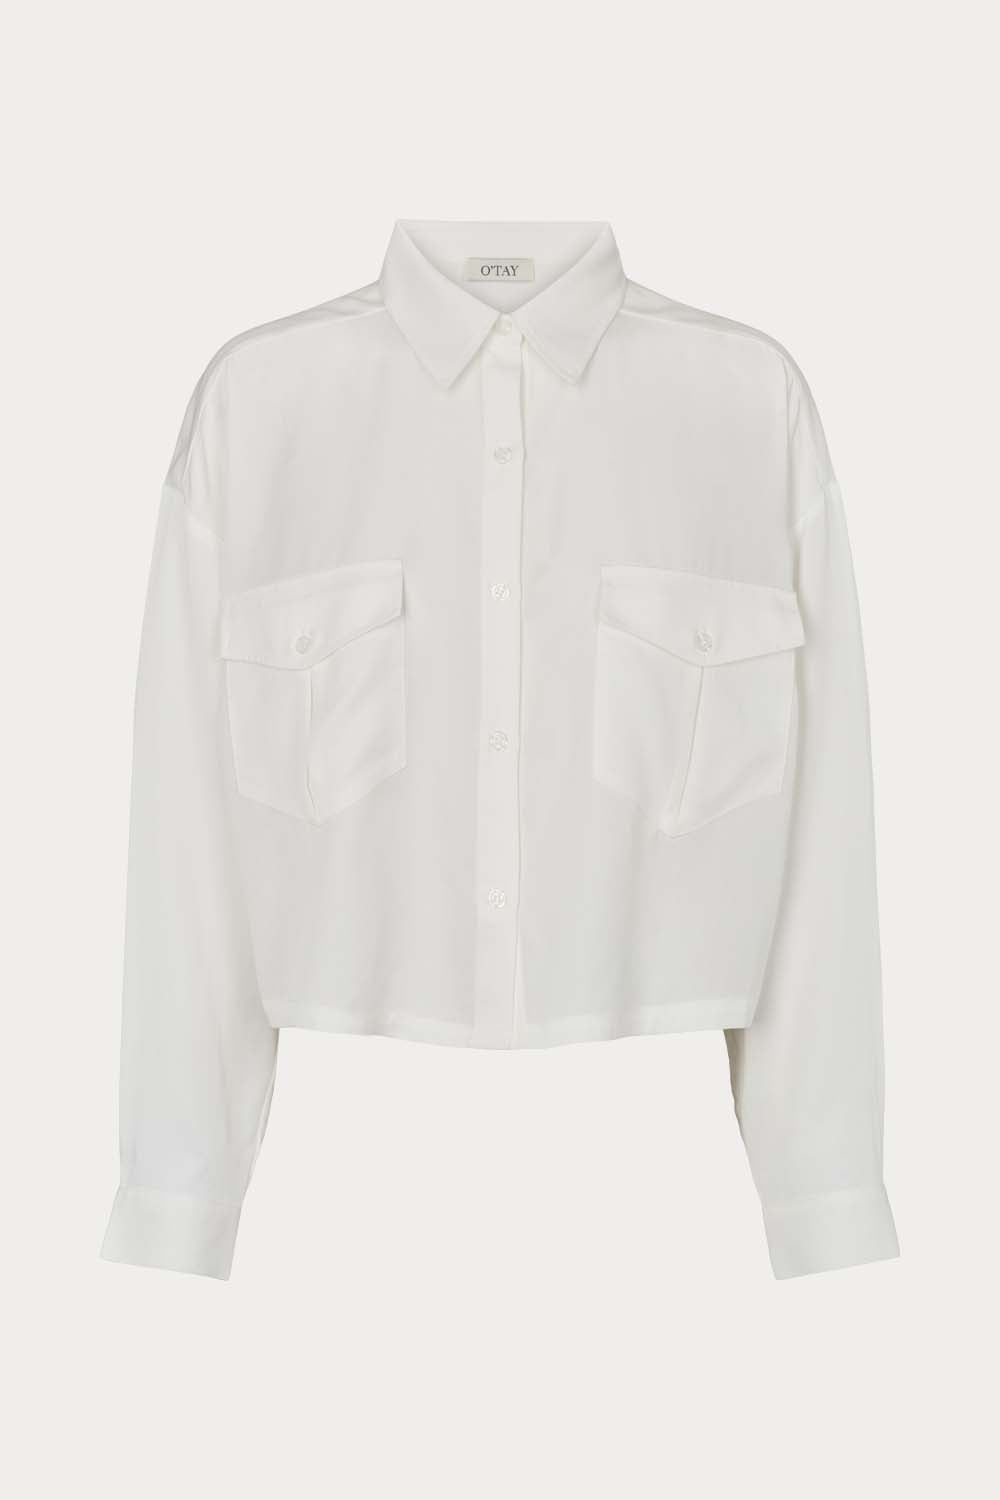 O'TAY Cerise Shirt Shirts White